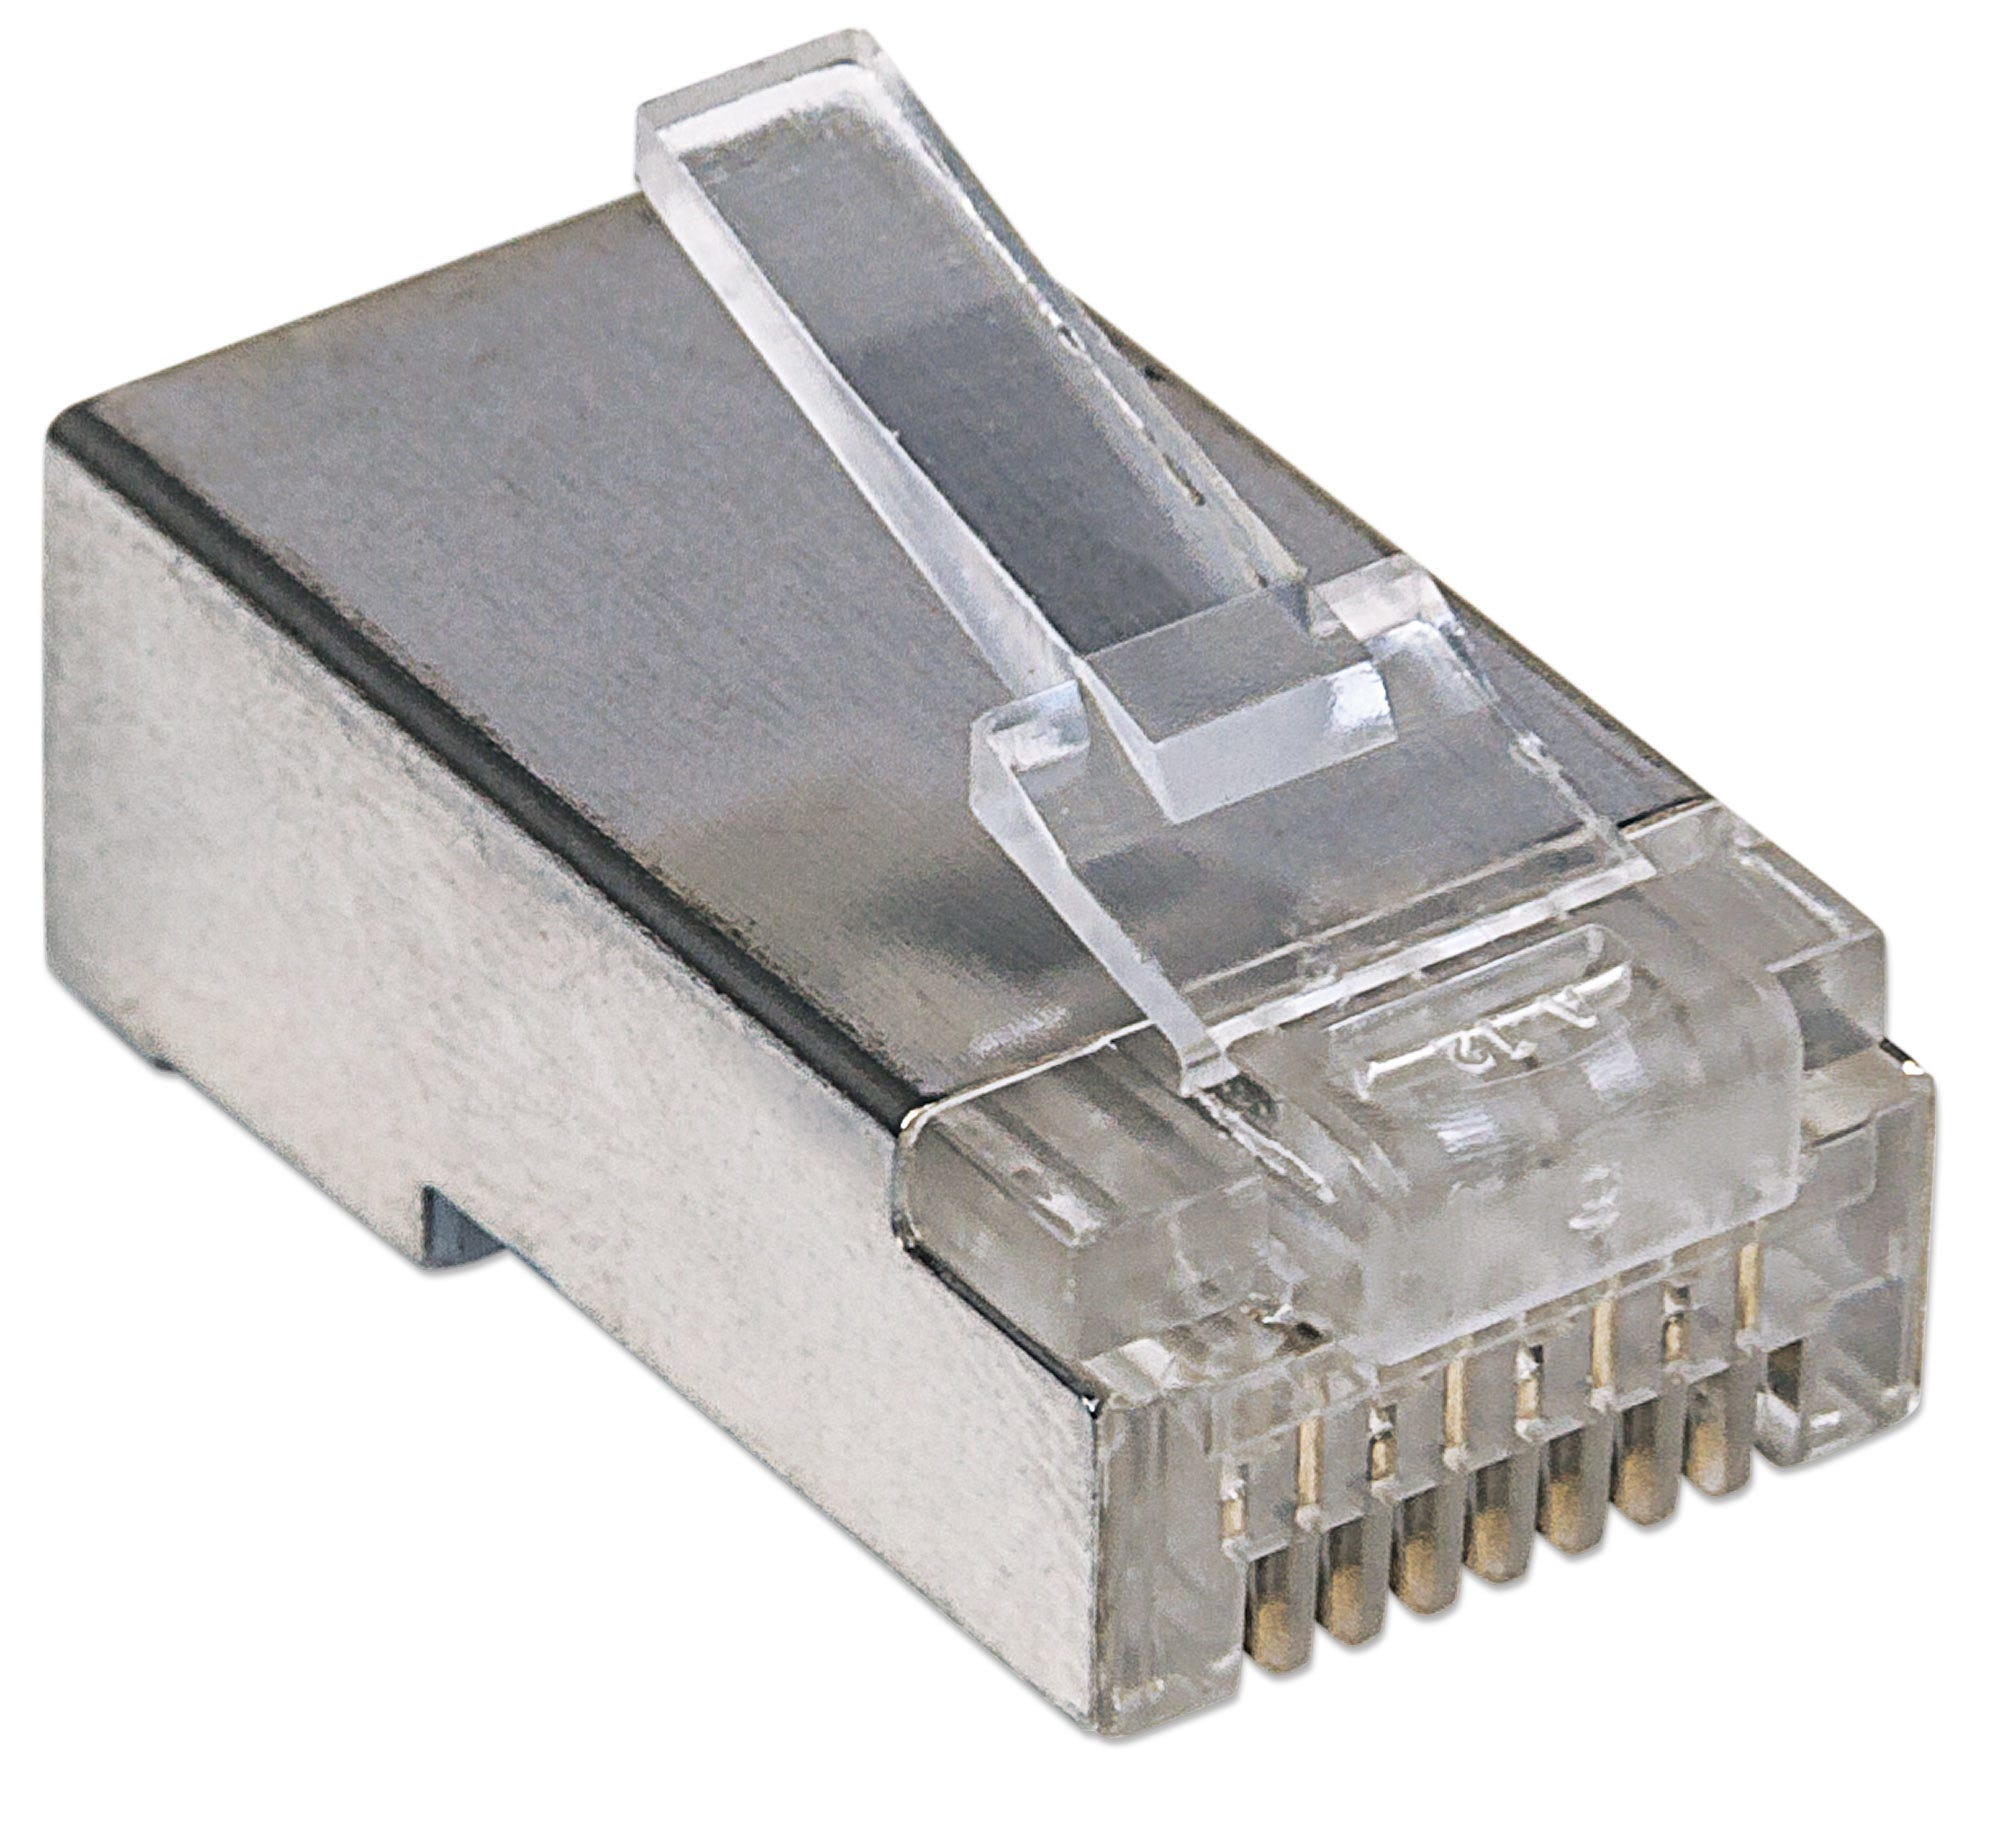 Intellinet 100er-Pack Cat5e RJ45-Modularstecker Pro Line, STP, 3-Punkt-Aderkontaktierung, für Litzen- und Massivdraht, 100 Stecker im Becher, 50 µ vergoldete Kontakte - Netzwerkanschluss - RJ-45 (M)